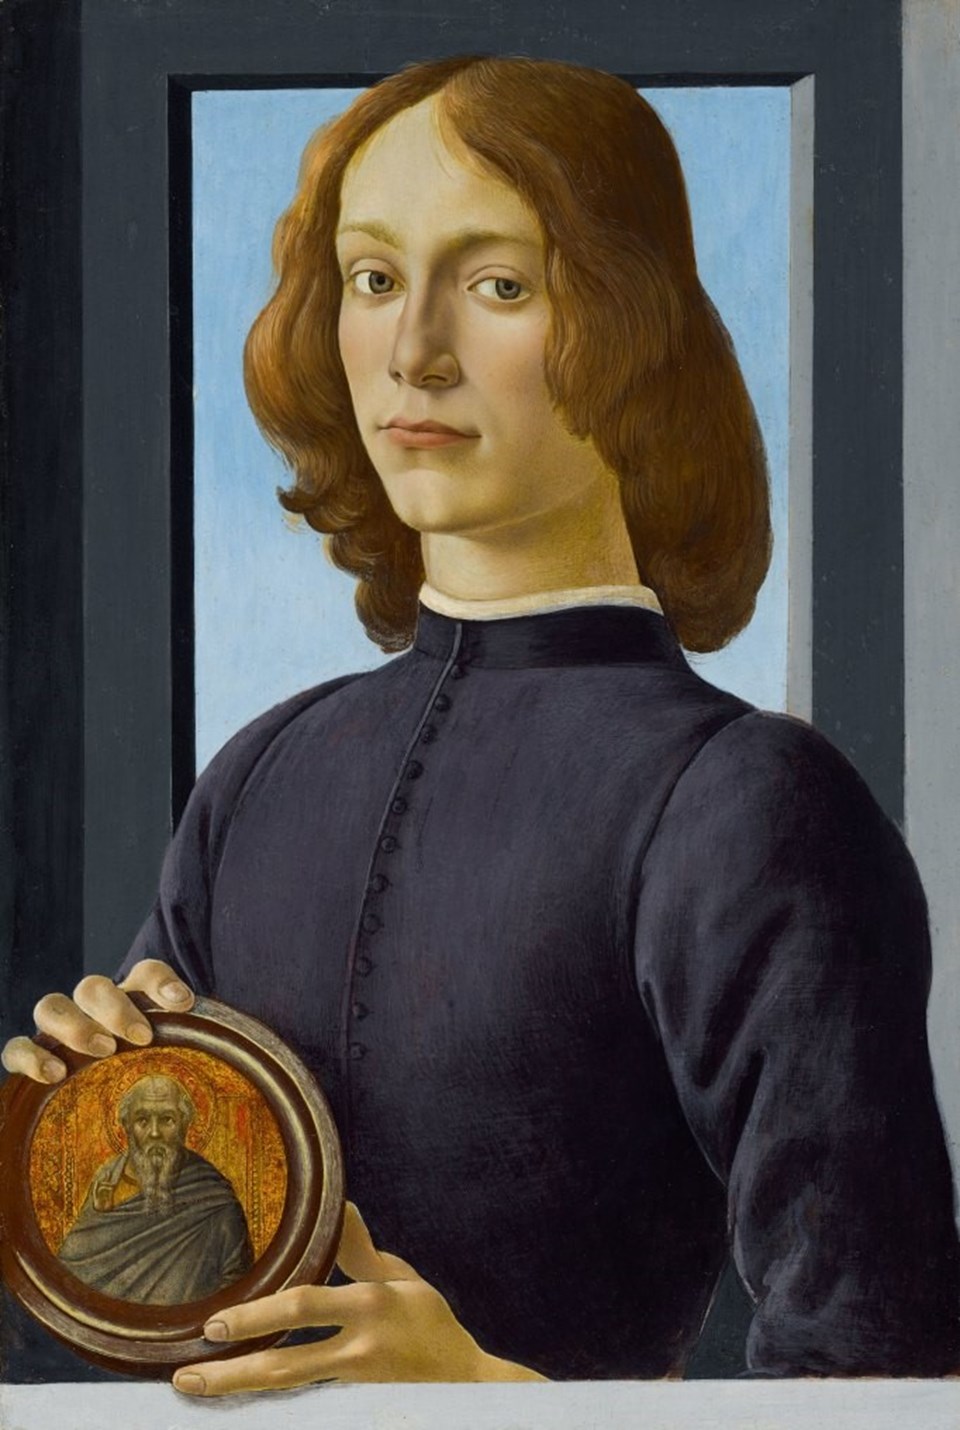 Sandro Botticelli imzalı tablo 80 milyon dolara satılıyor - 1